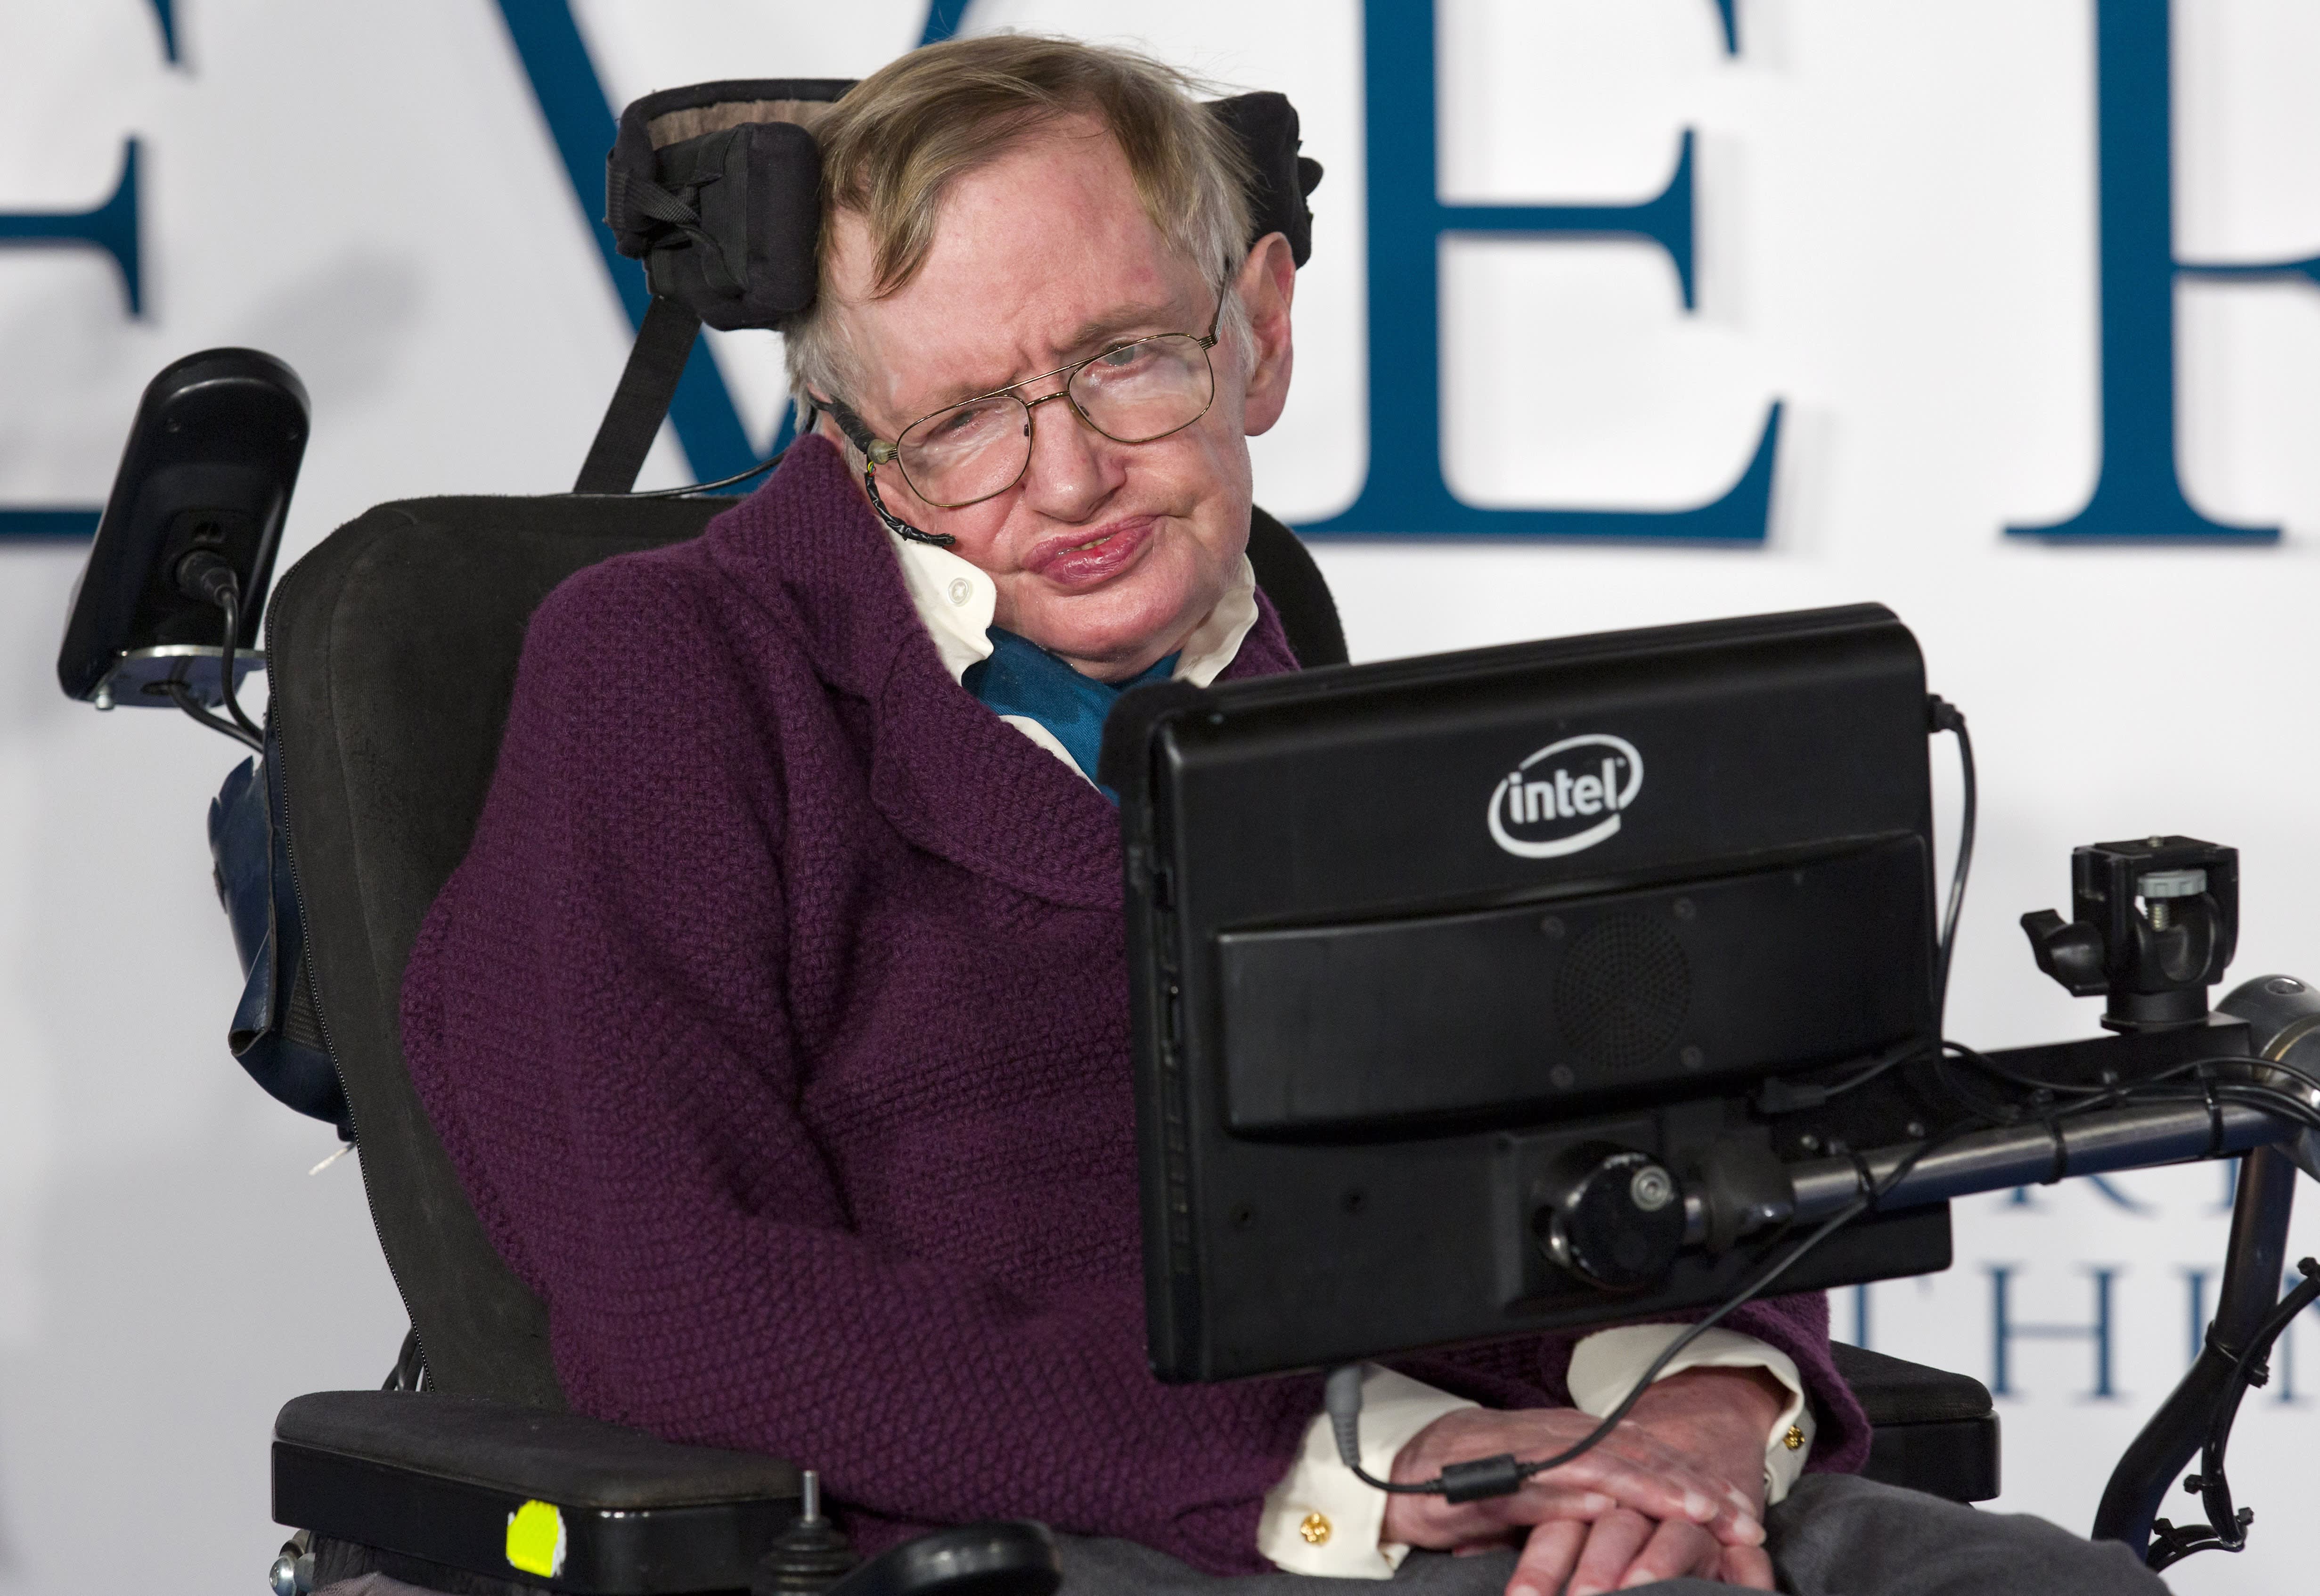 Stephen Hawking wearing purple suit